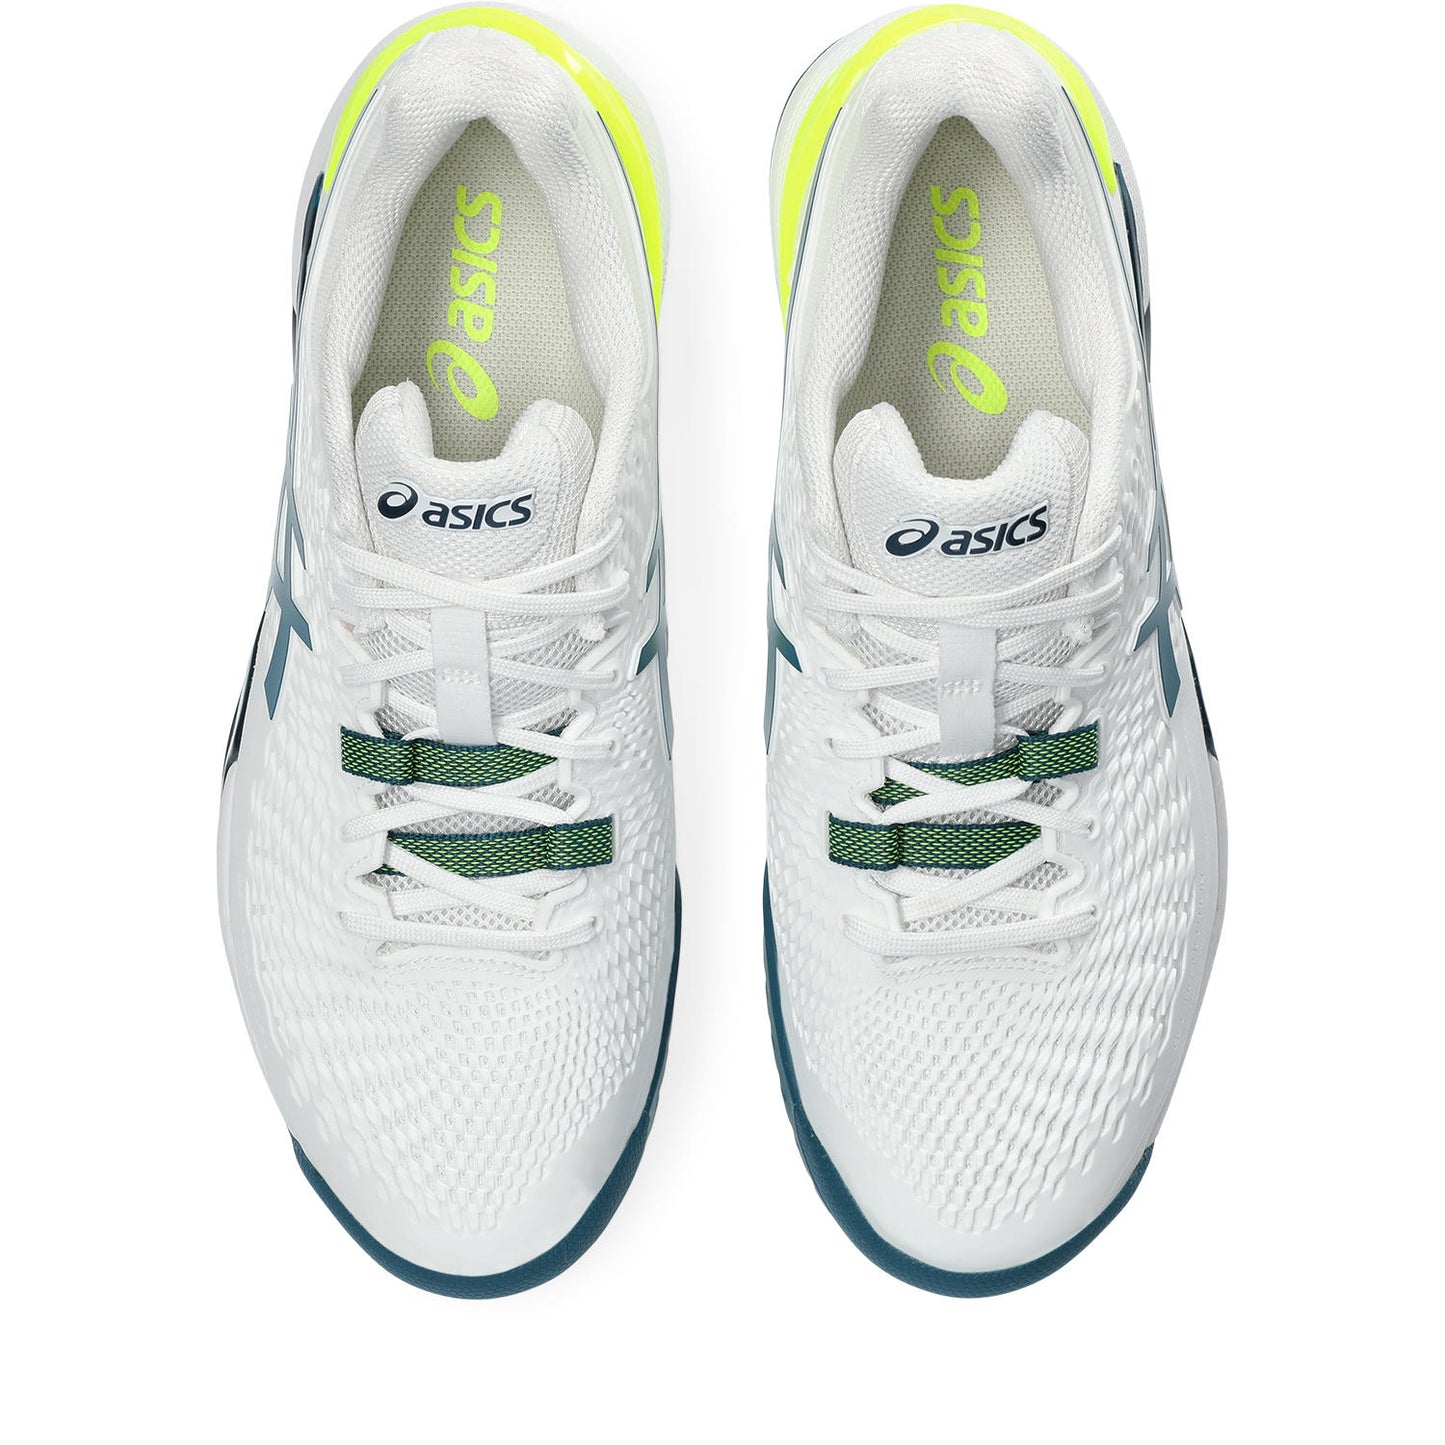 Asics Gel Resolution 9 Men Wide tennis shoes - Antique White/Teal 376.101